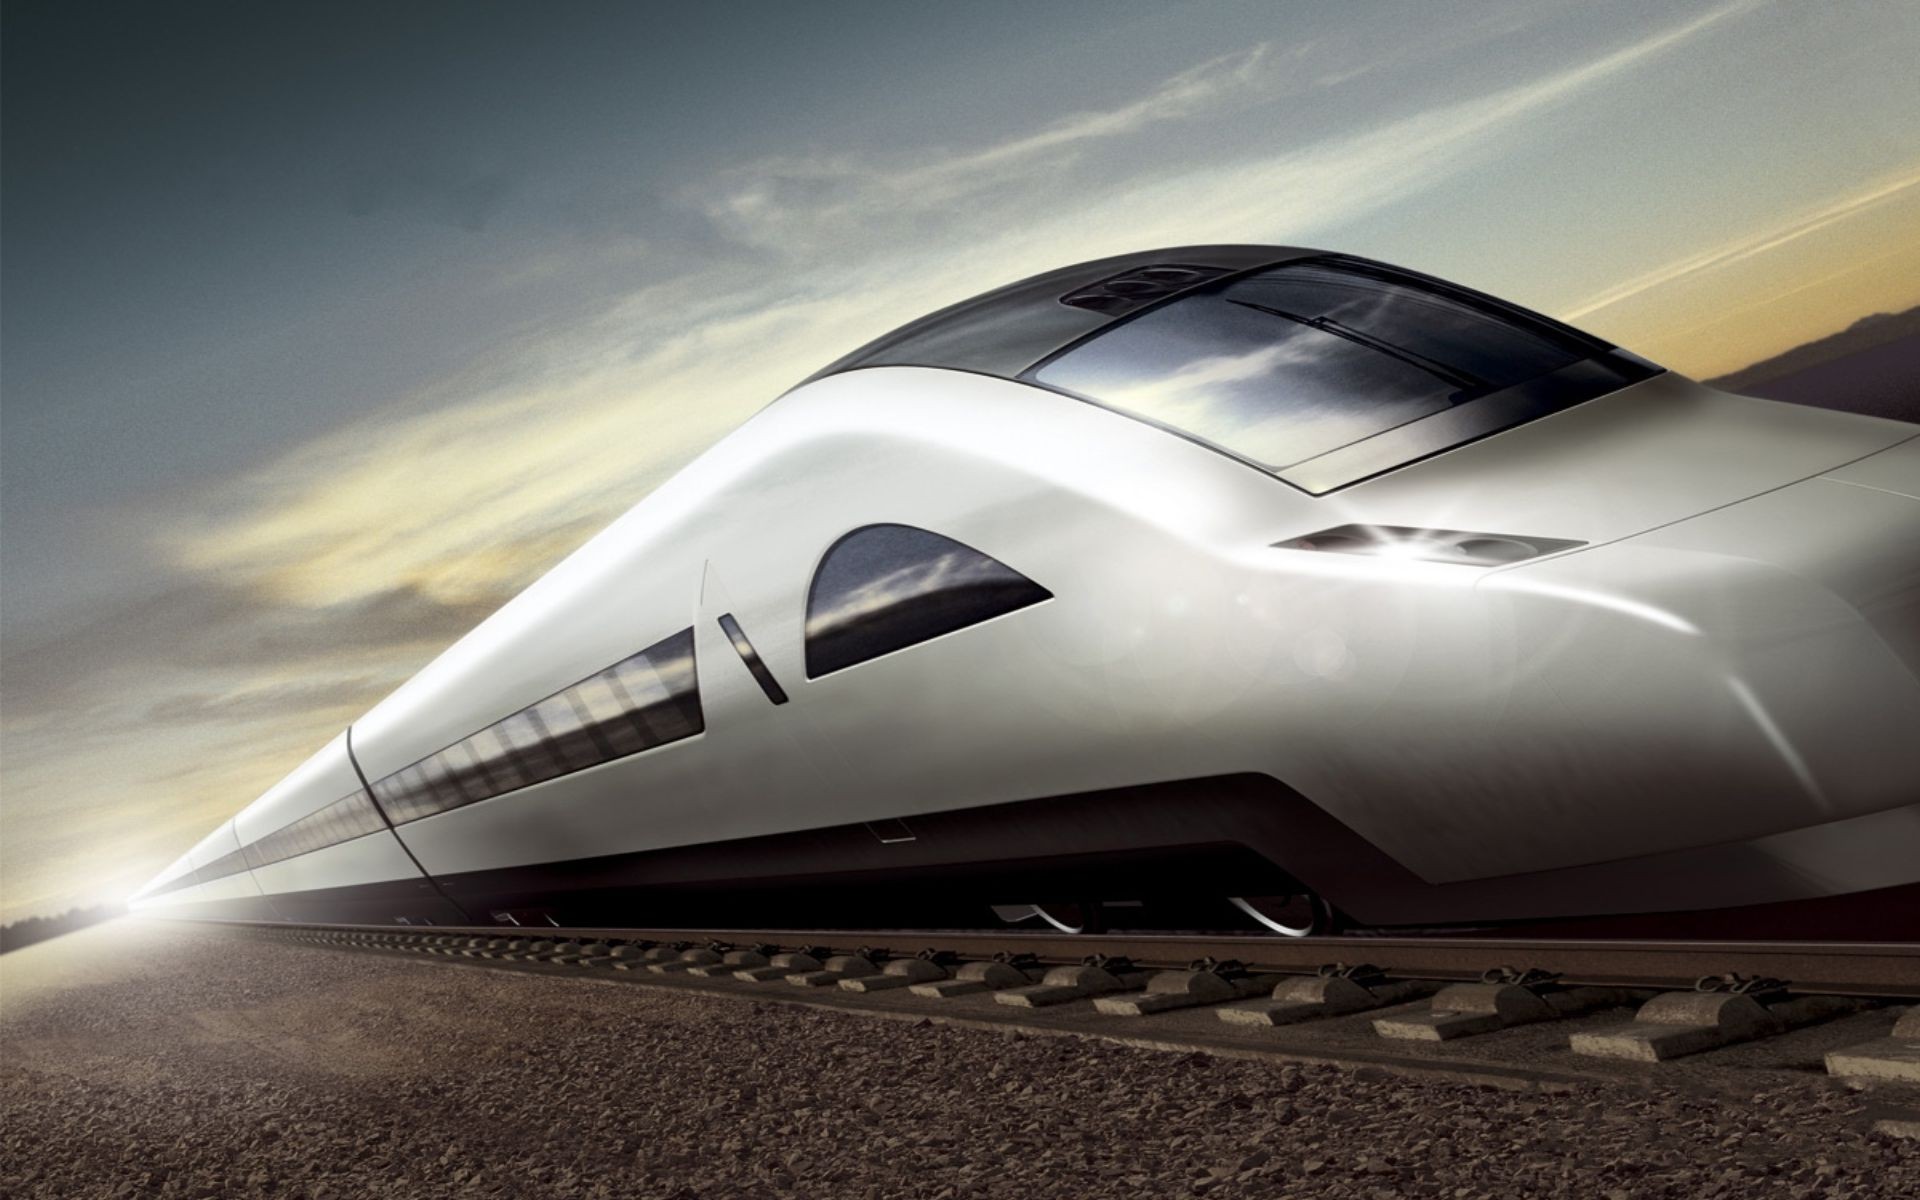 papier peint train à grande vitesse,voie ferree a haute vitesse,véhicule,chemin de fer,train,train à grande vitesse